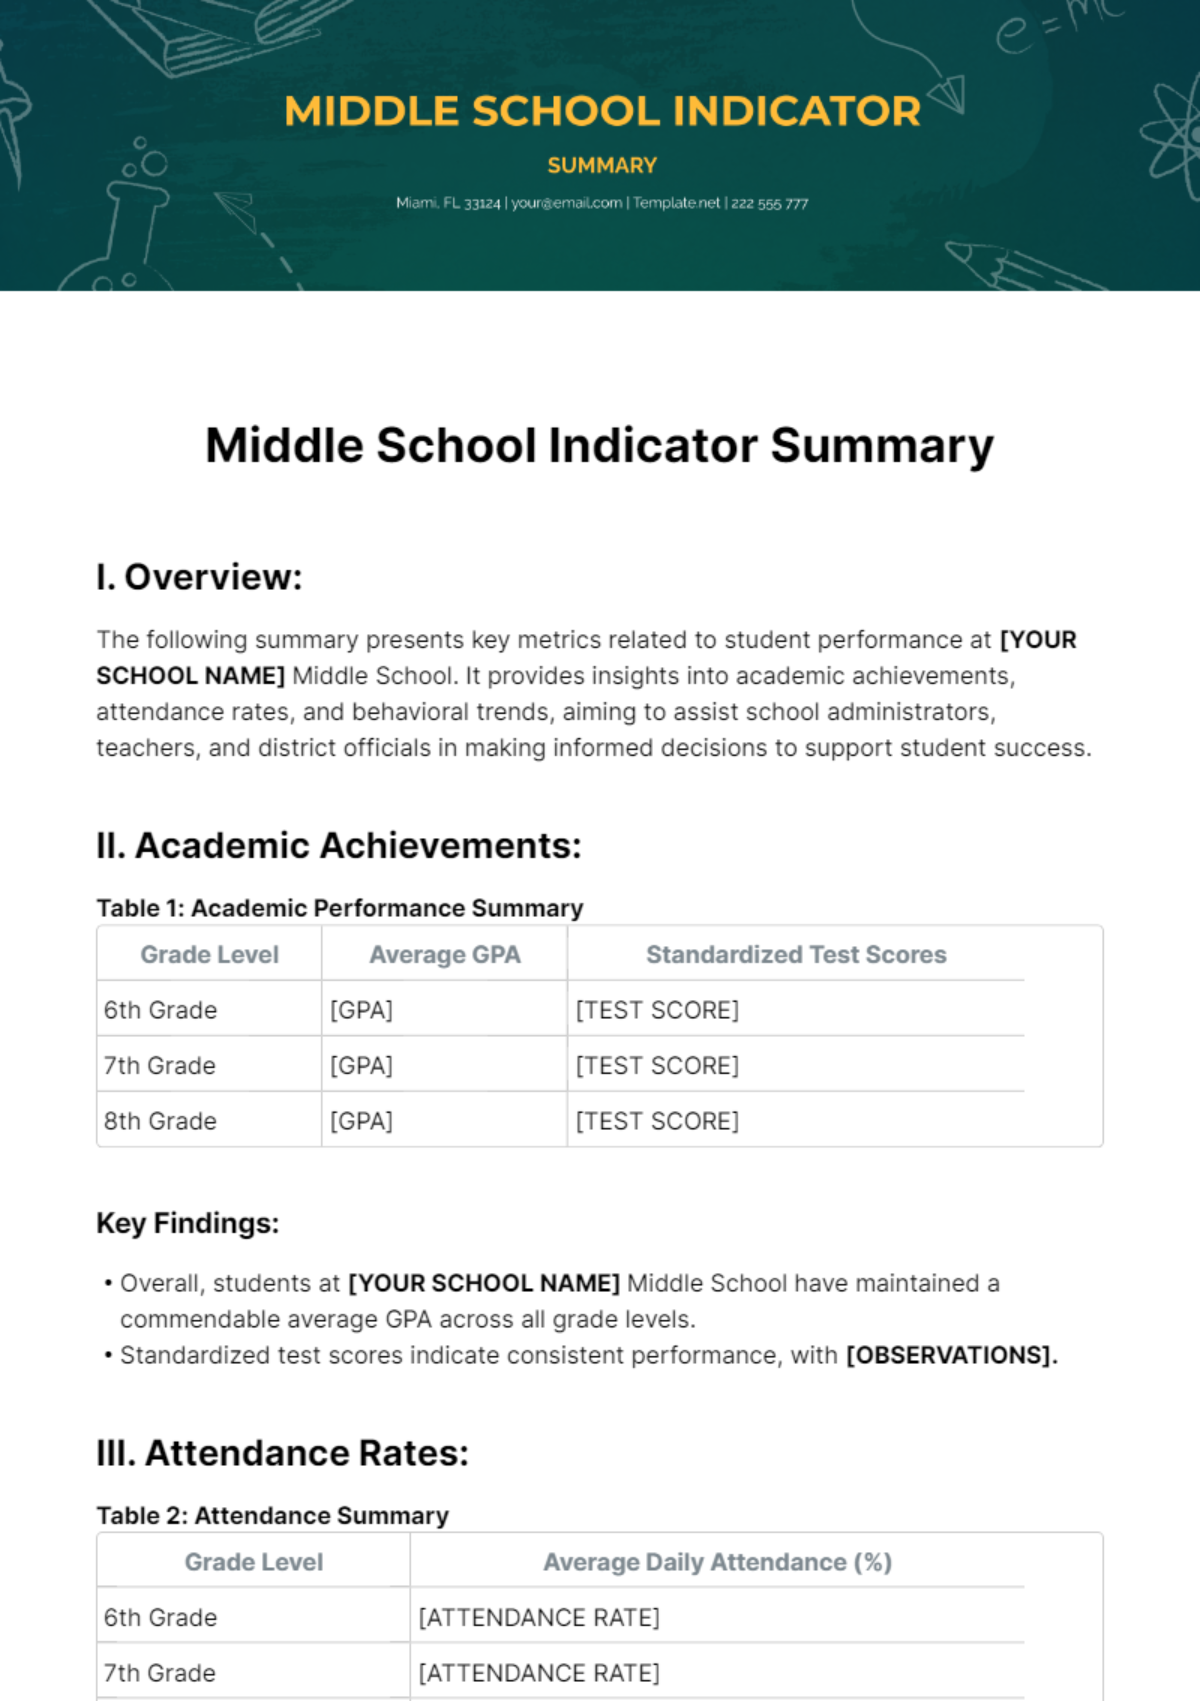 Middle School Indicator Summary Template